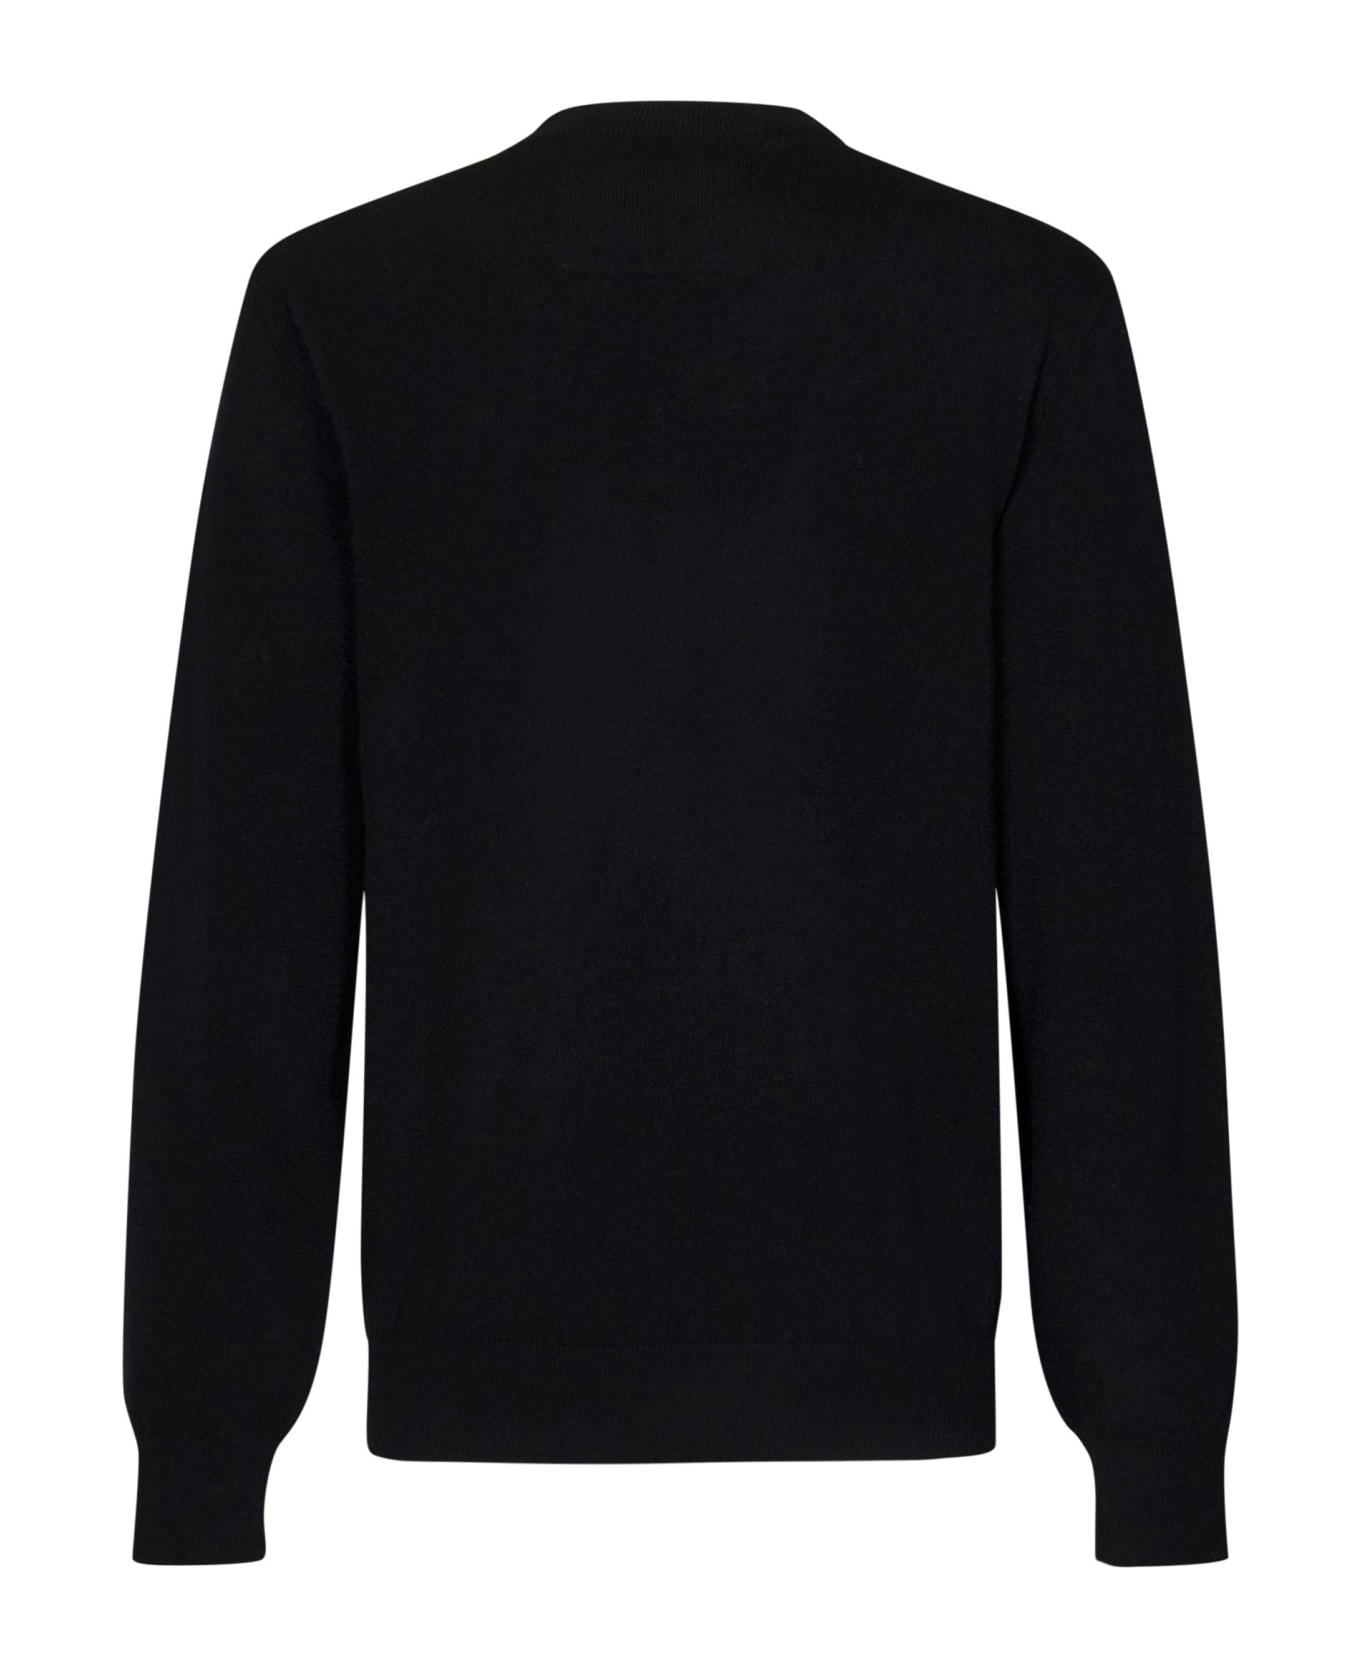 Givenchy Wool Knitwear - Black